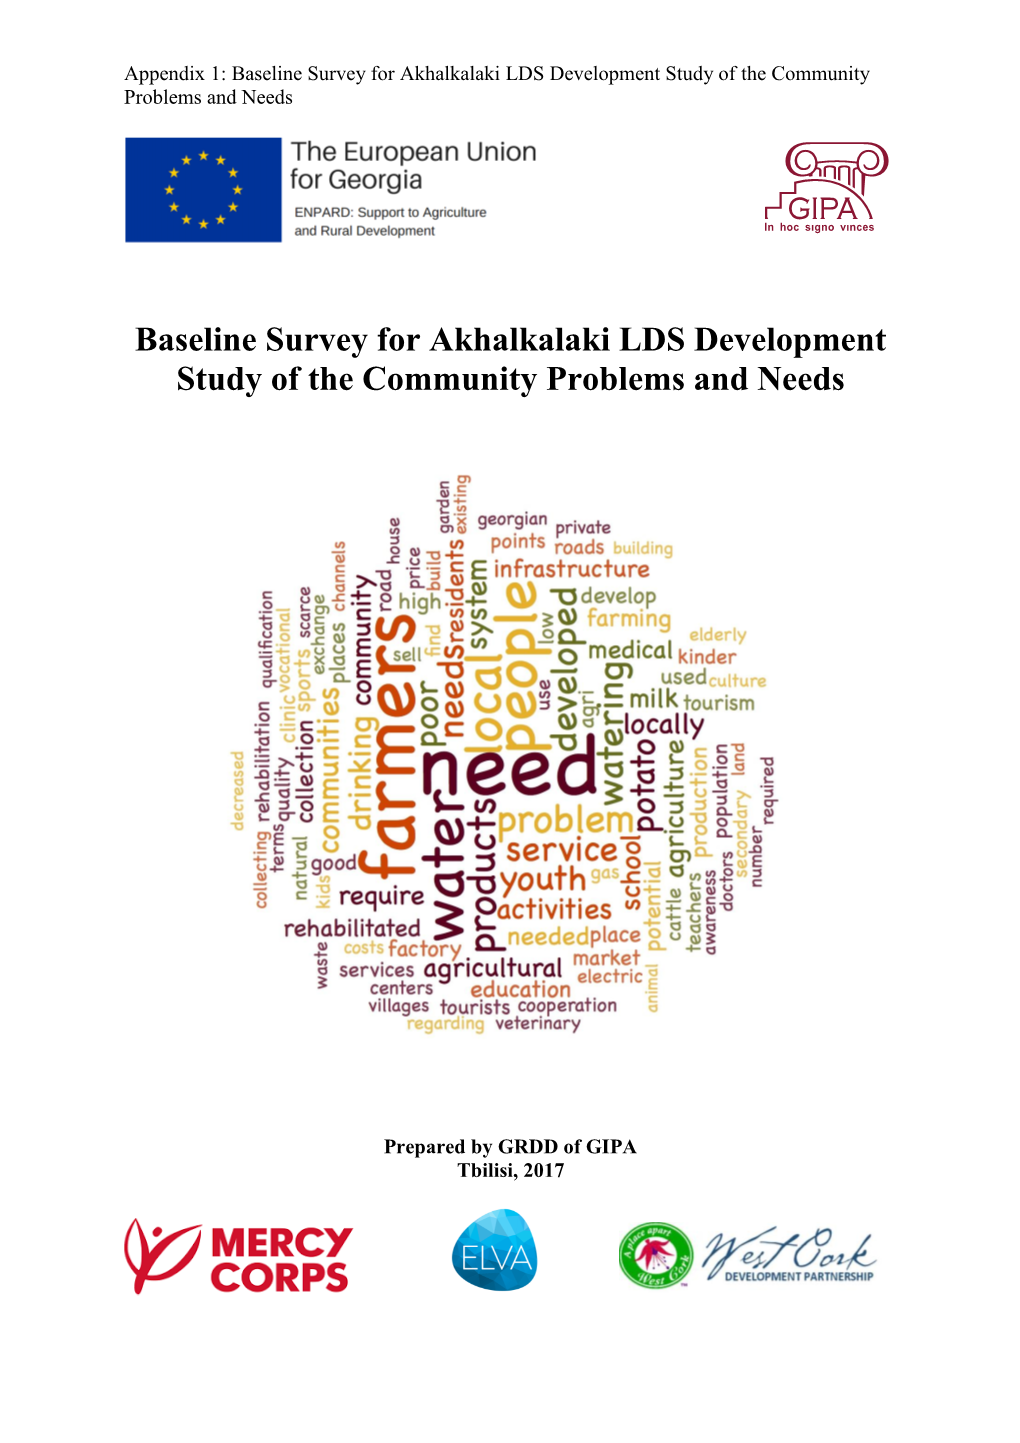 Appendix 1. Baseline Survey for Akhalkalaki LDS Development